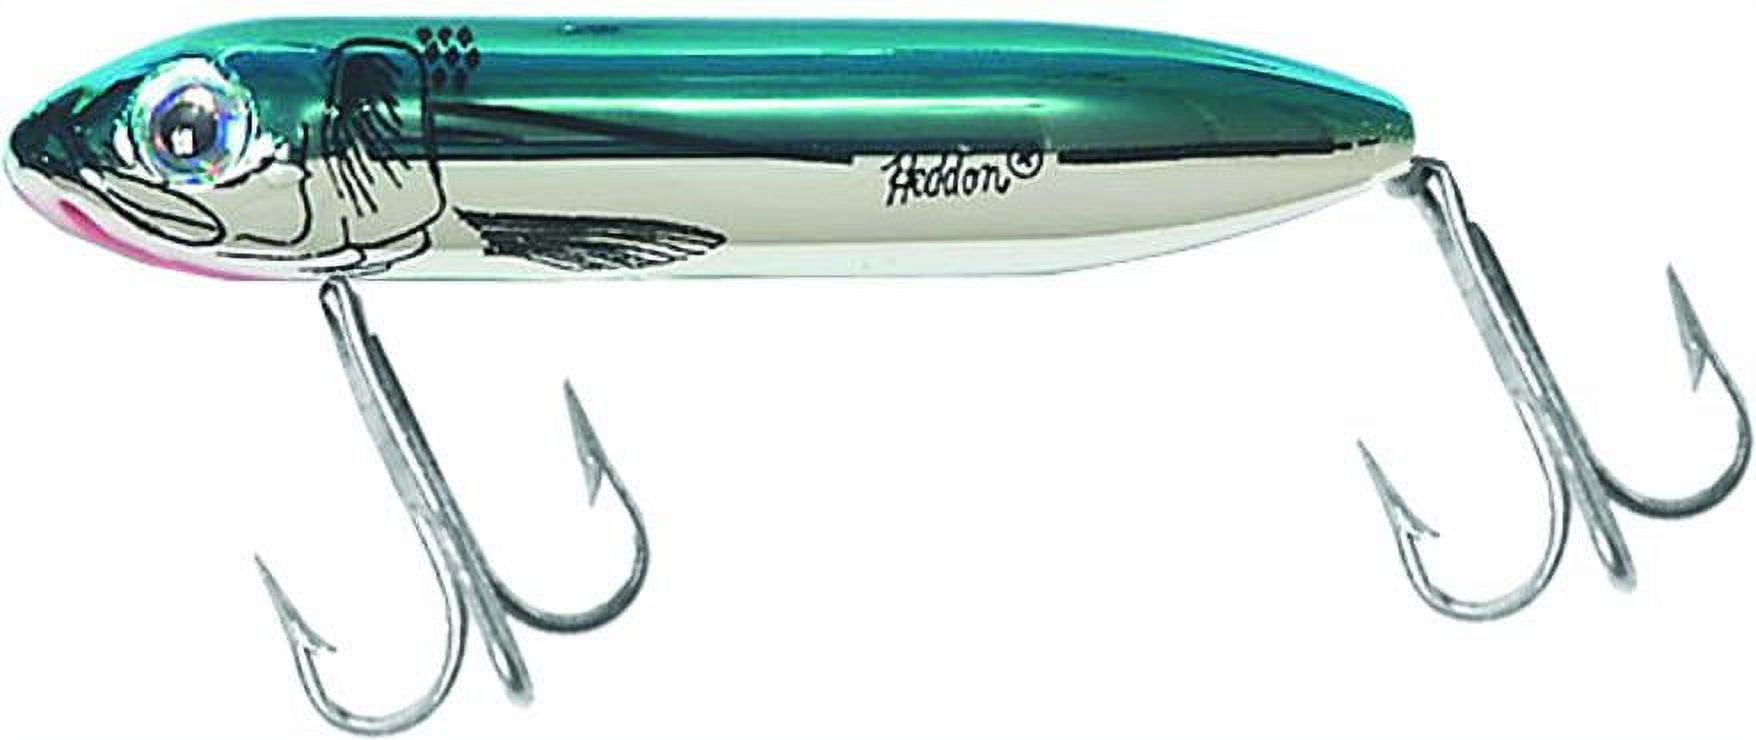 Heddon Super Spook Jr Fishing Lure Hard bait Baby Bass 3 1/2 in 1/2 oz